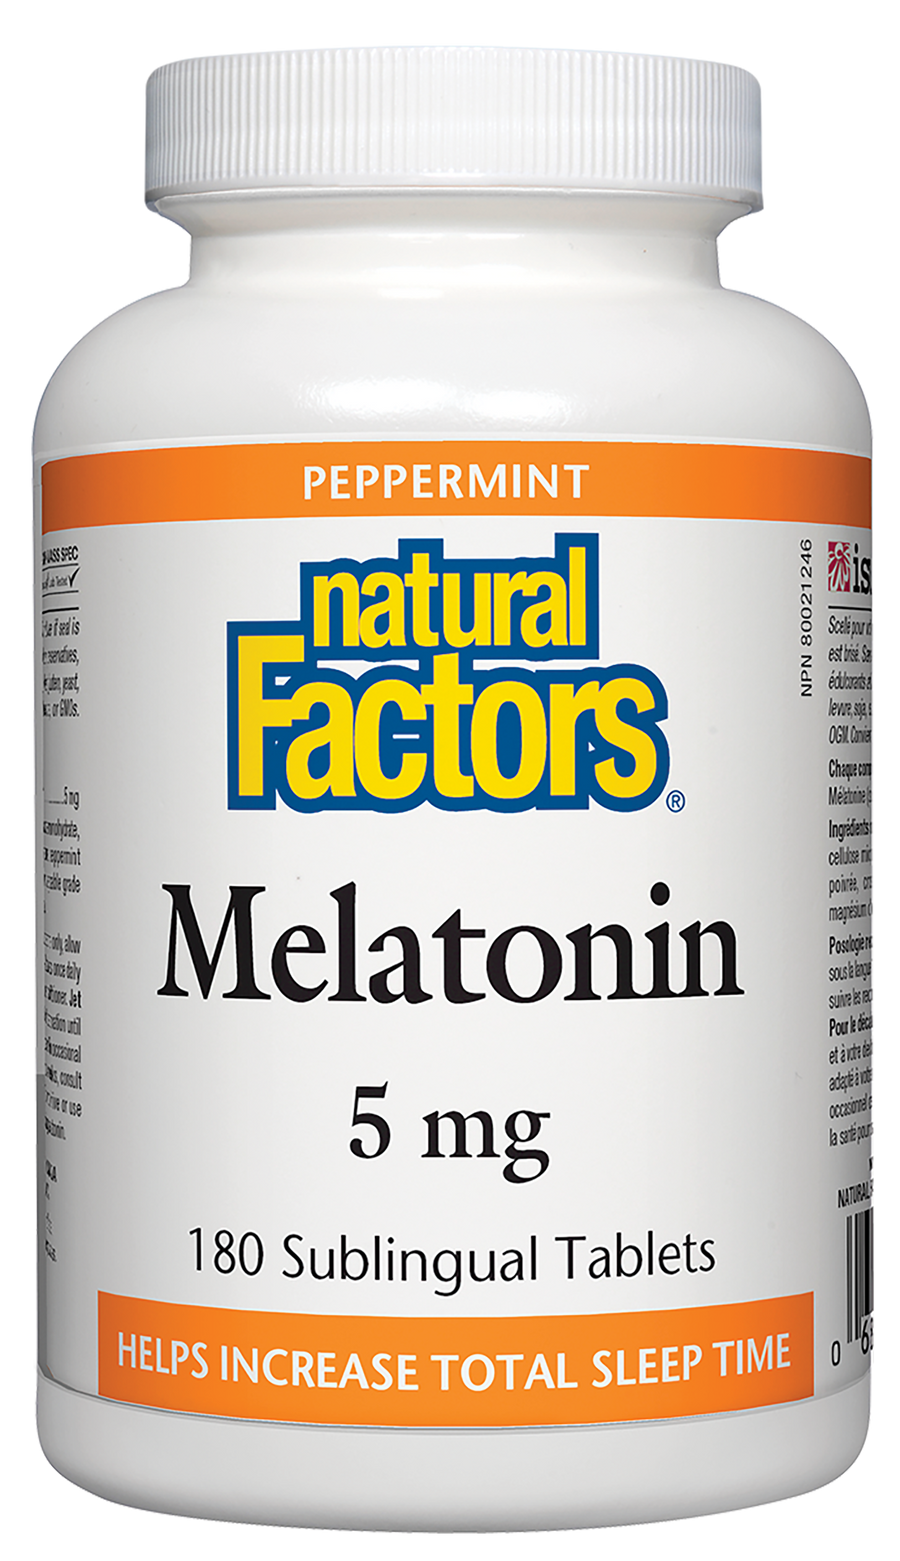 Natural Factors Melatonin 5 mg, Peppermint 180 Sublingual Tablets